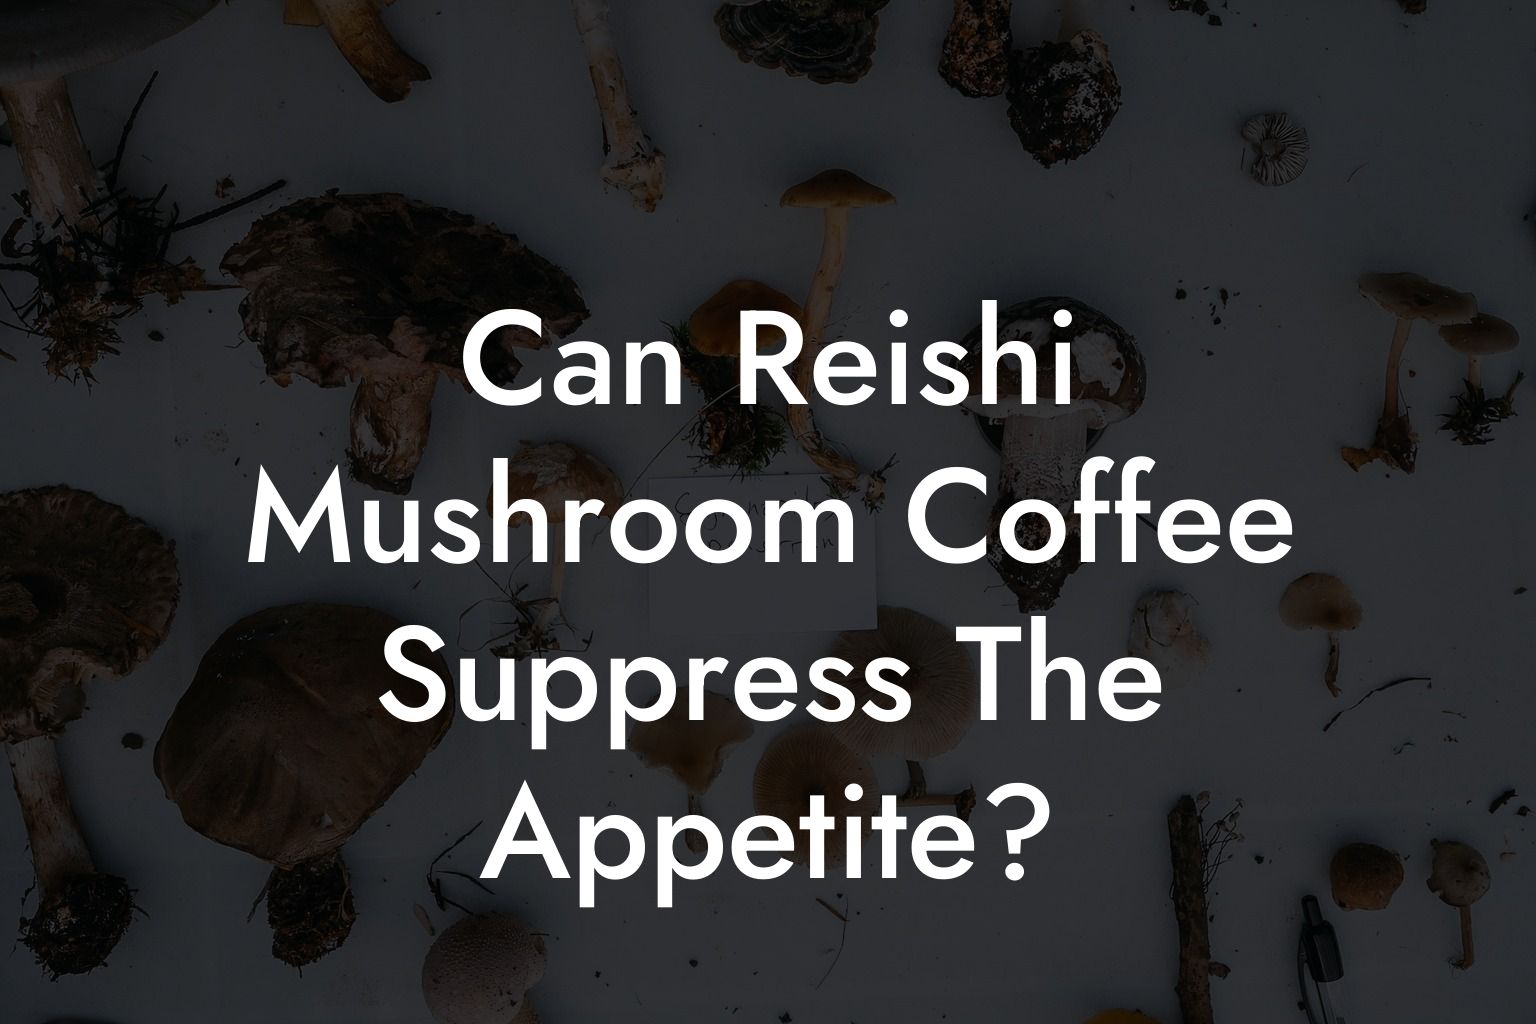 Can Reishi Mushroom Coffee Suppress The Appetite?